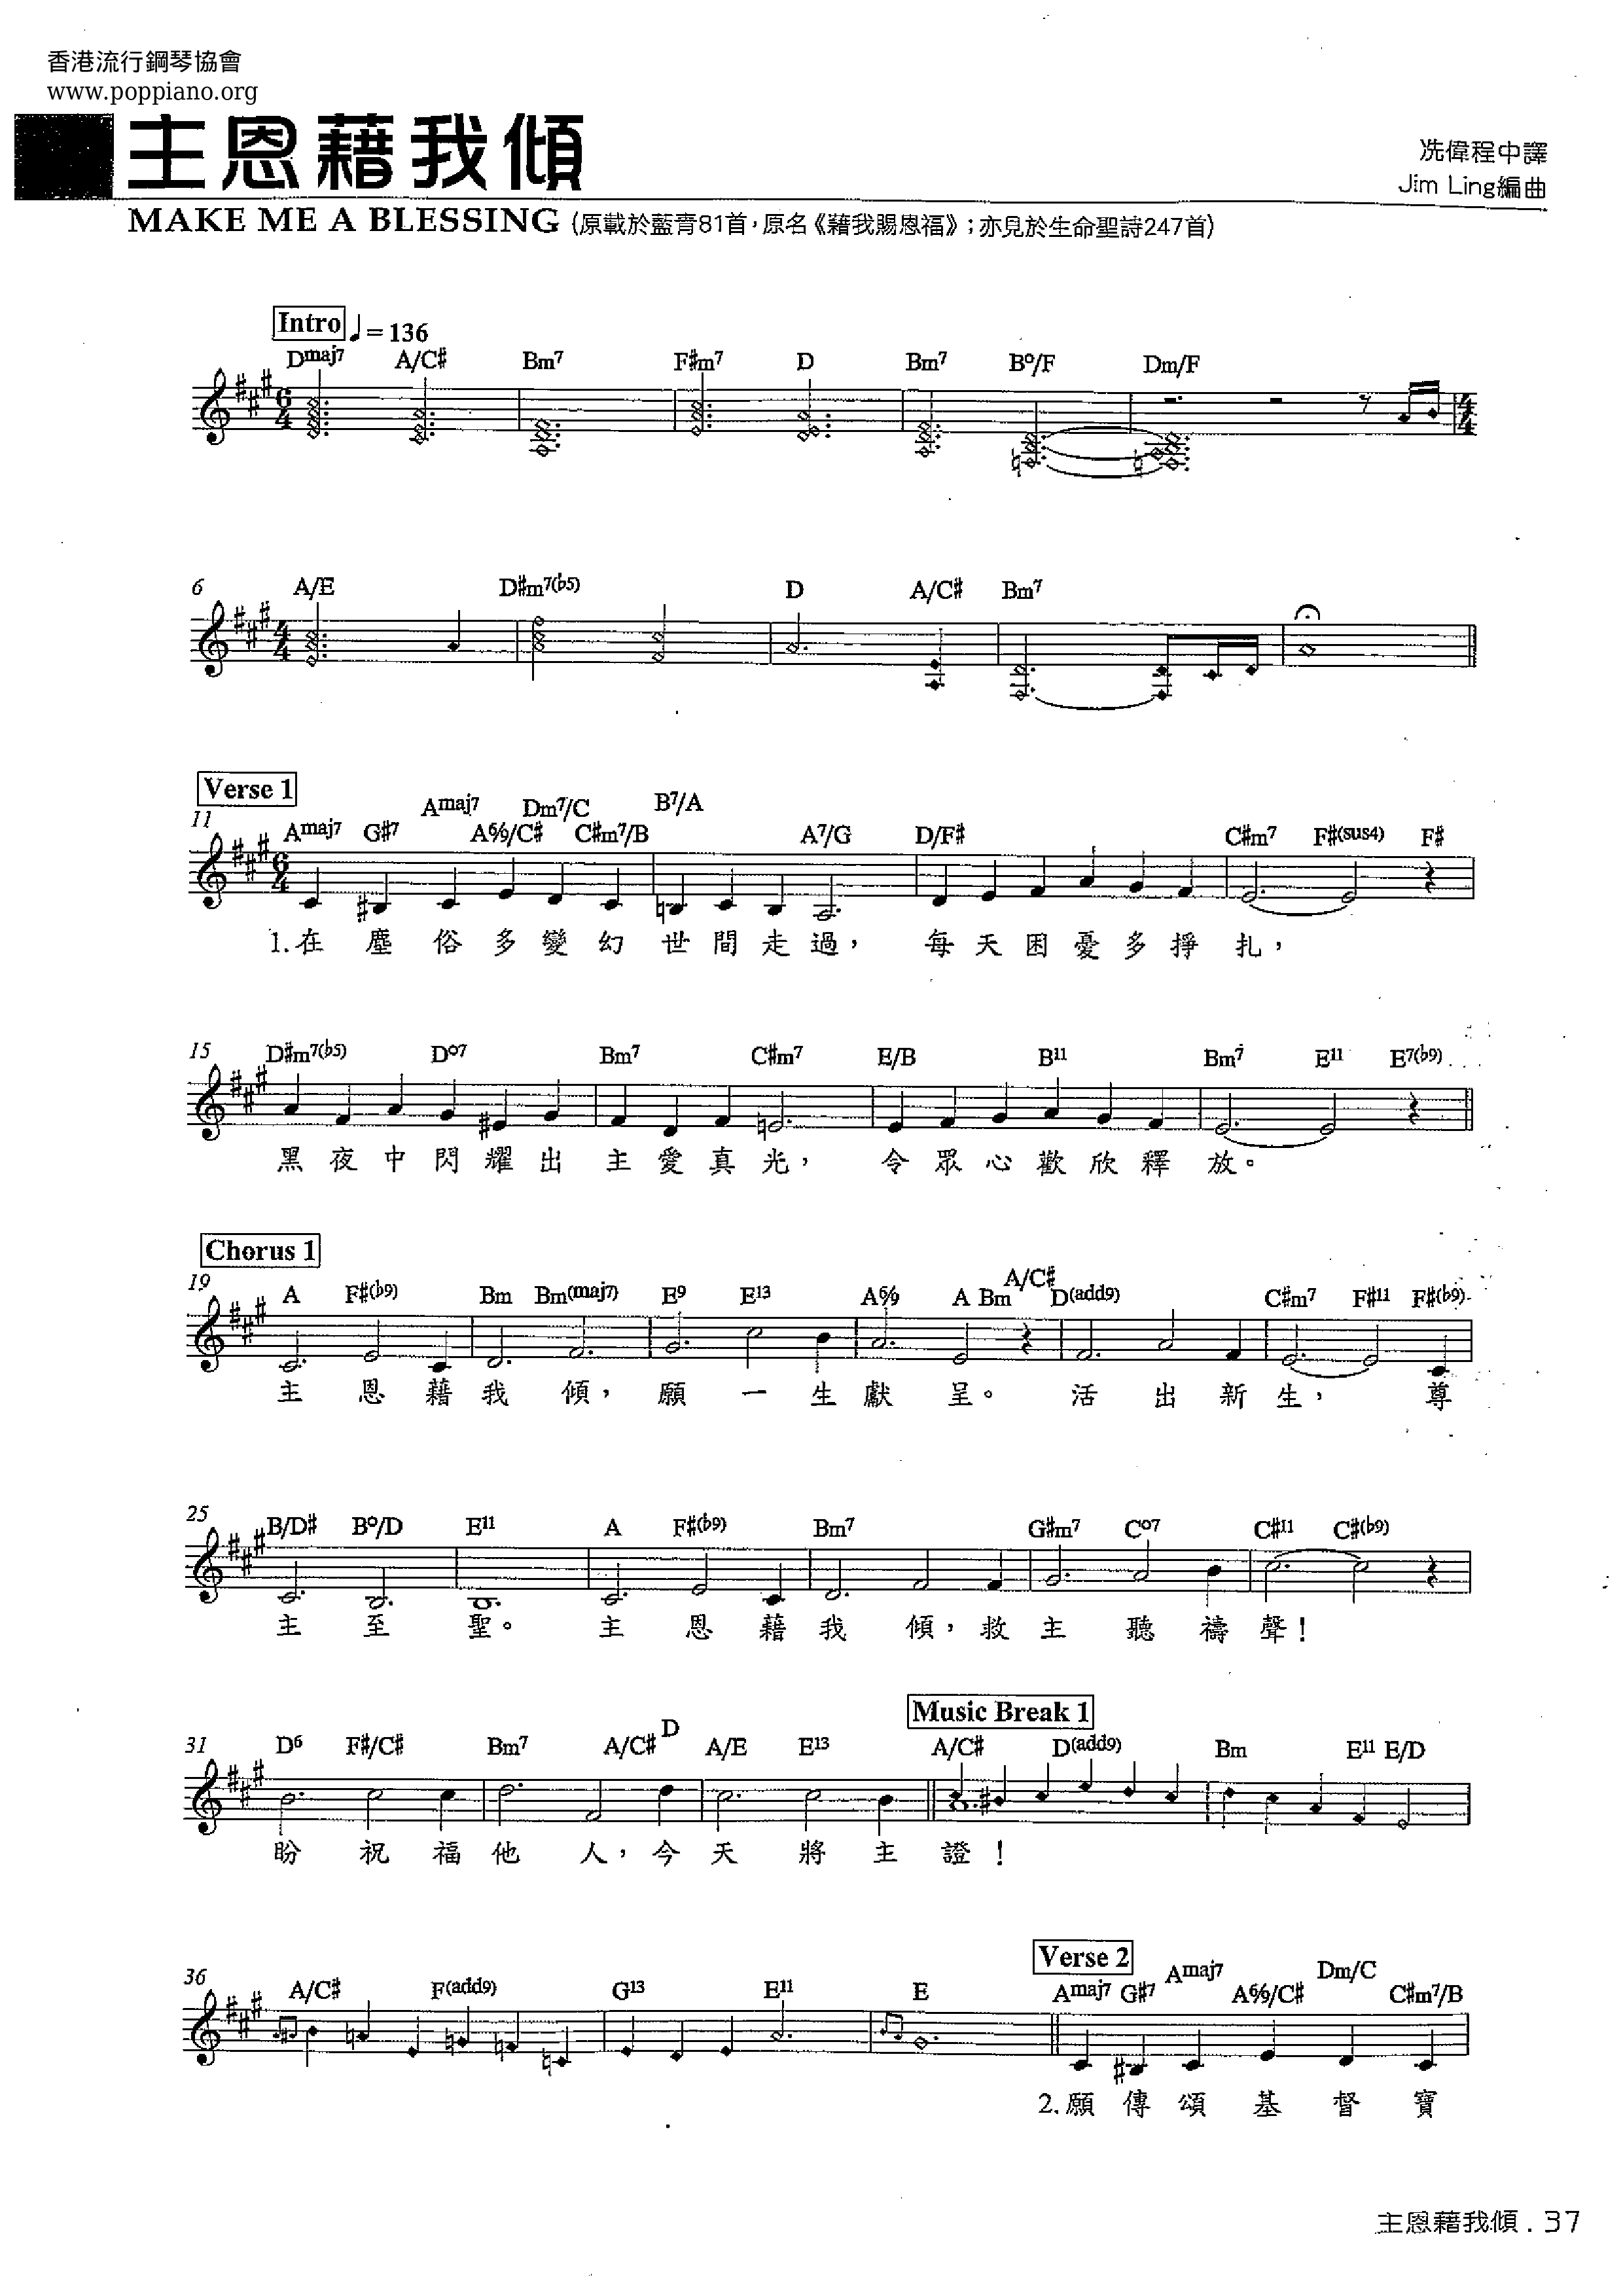 Lord's Grace By Me Score